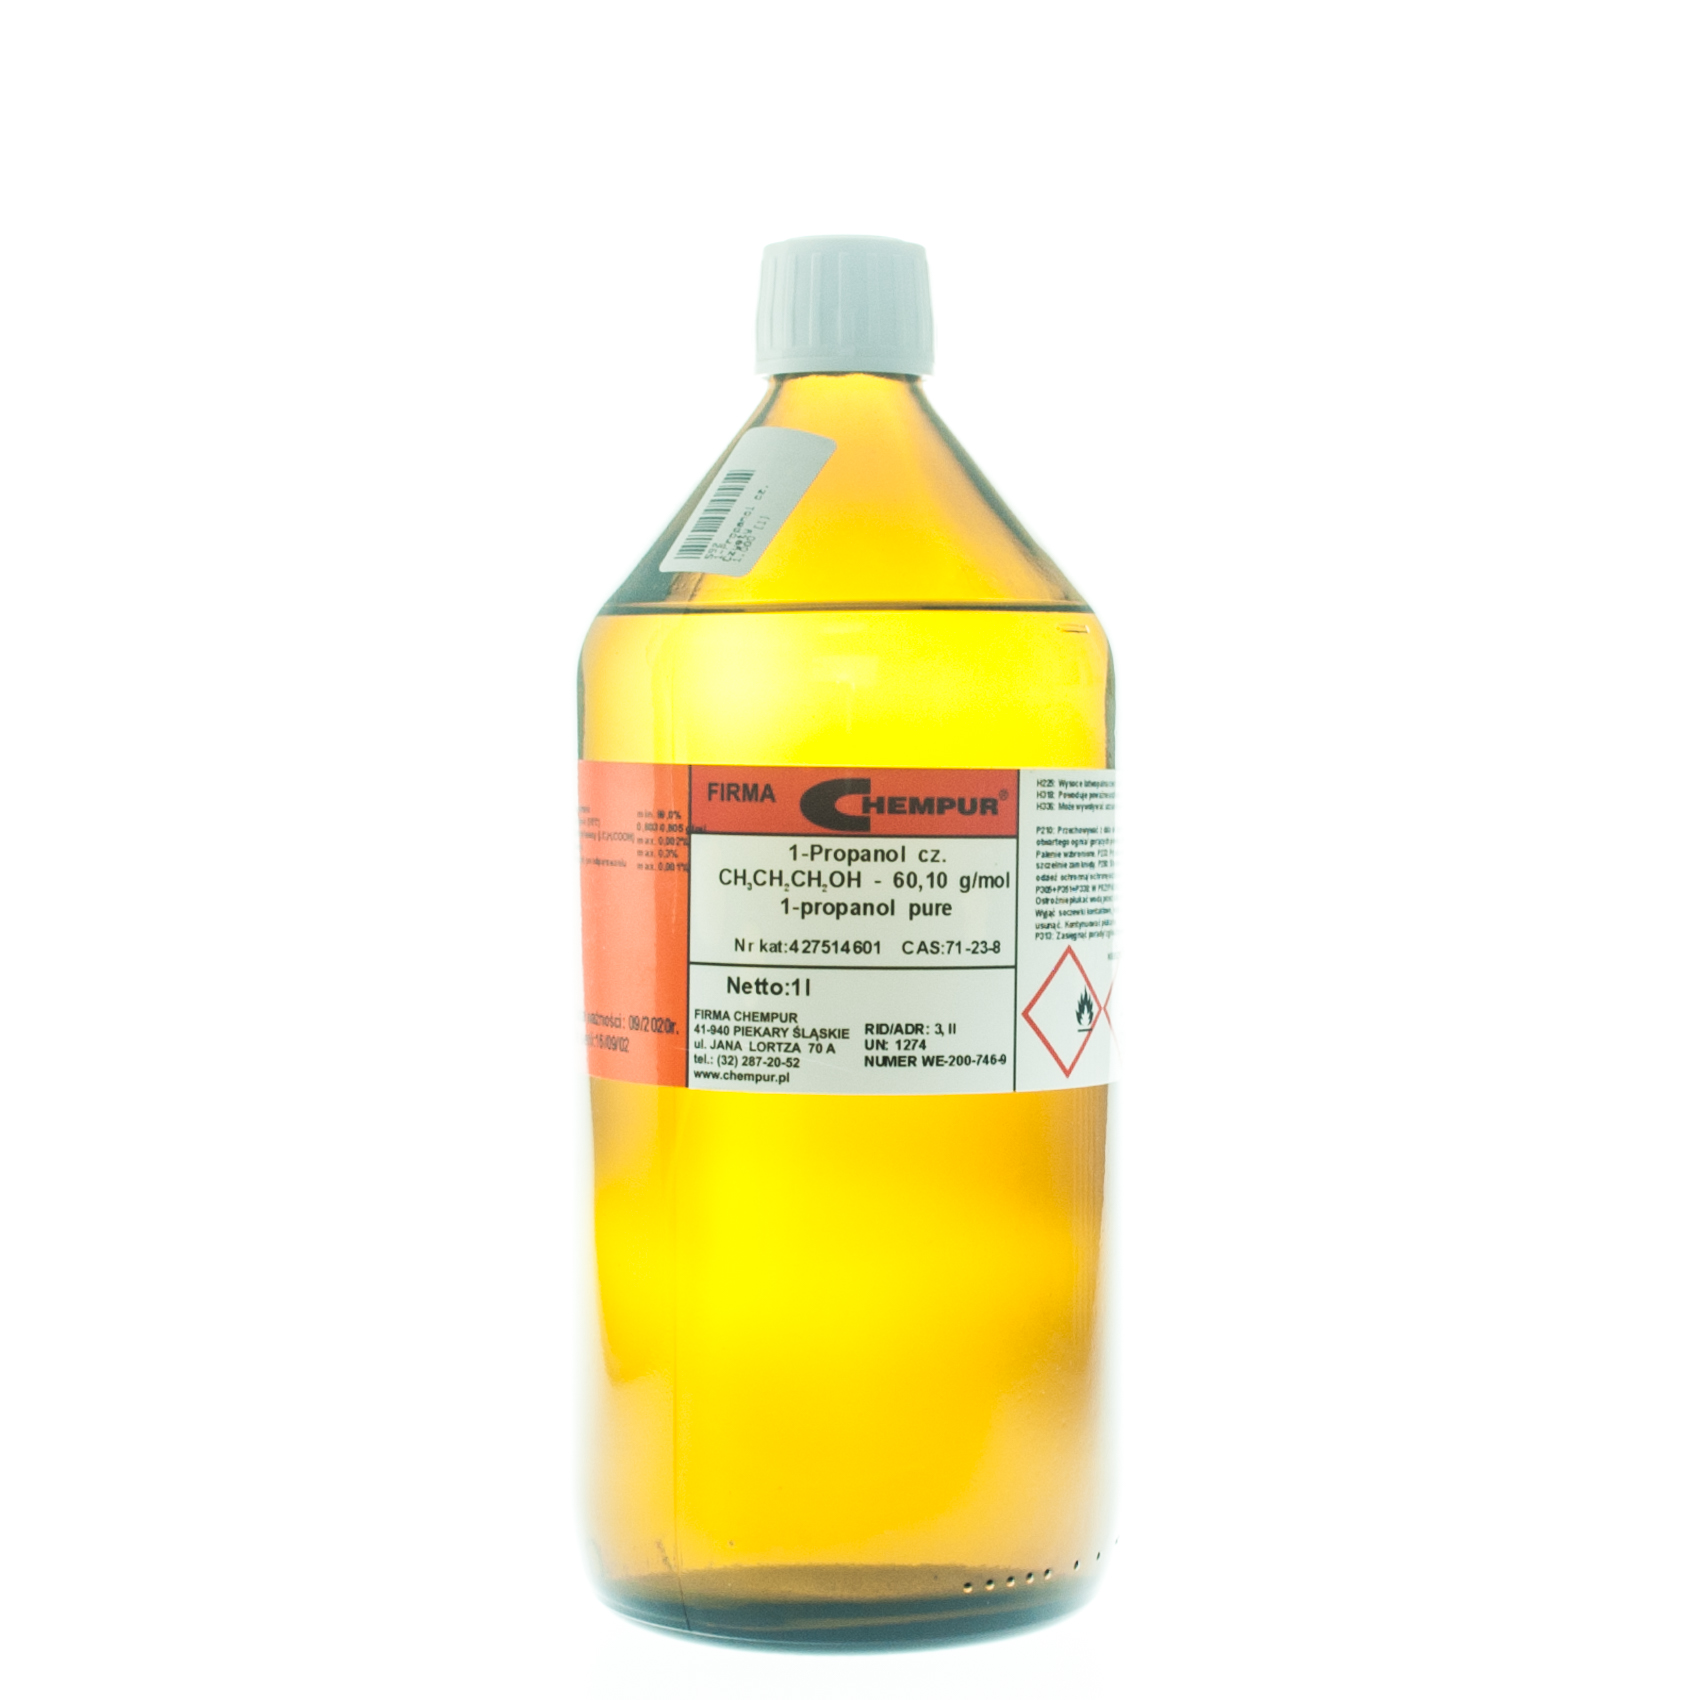 1-propanol pure